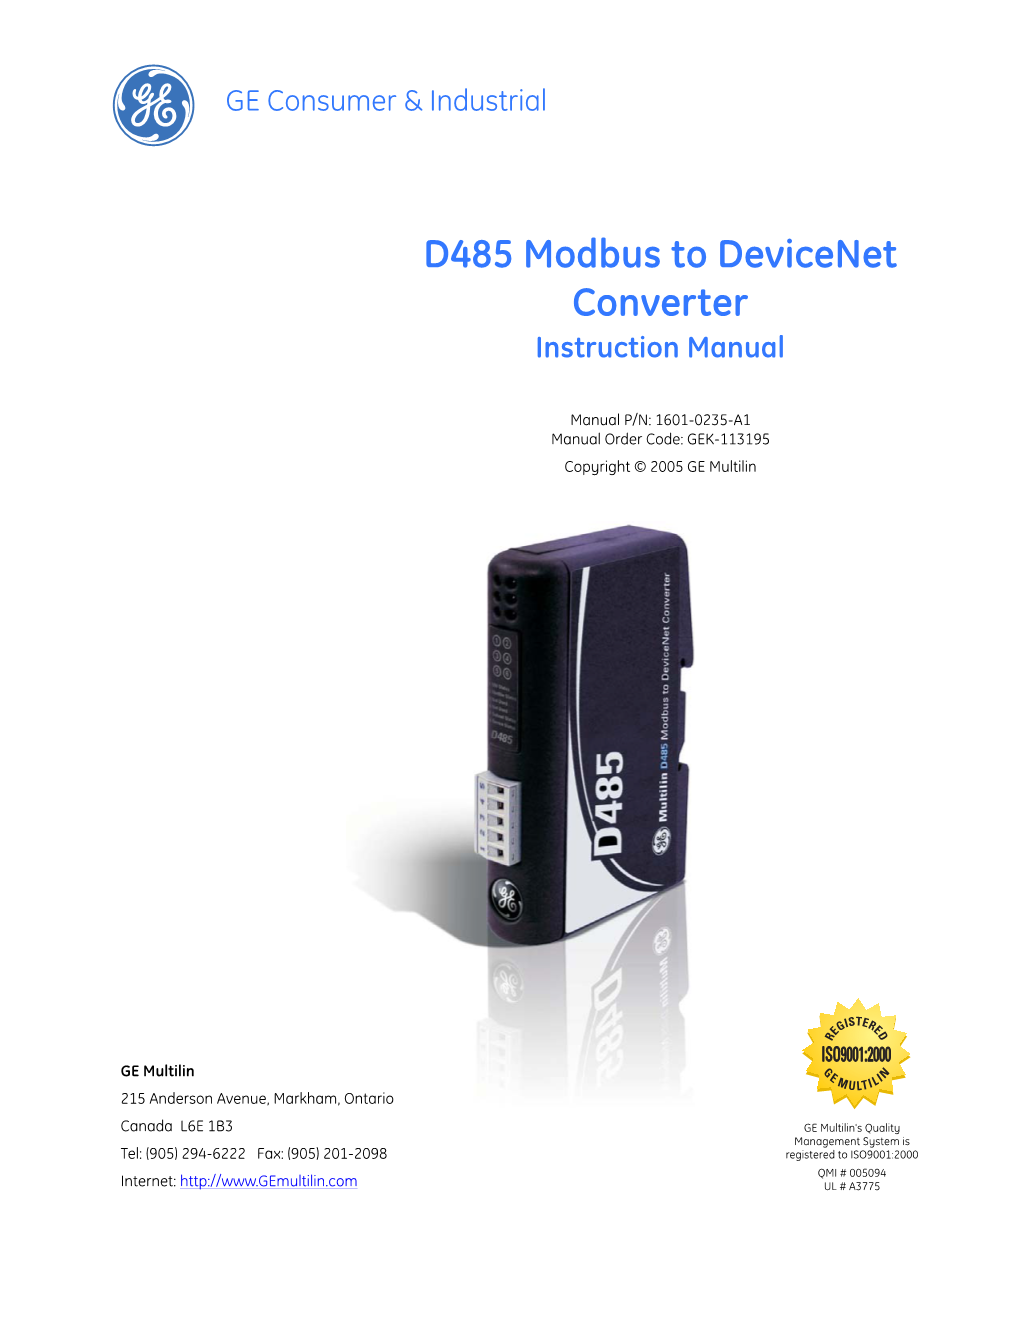 D485 Modbus to Devicenet Converter Instruction Manual